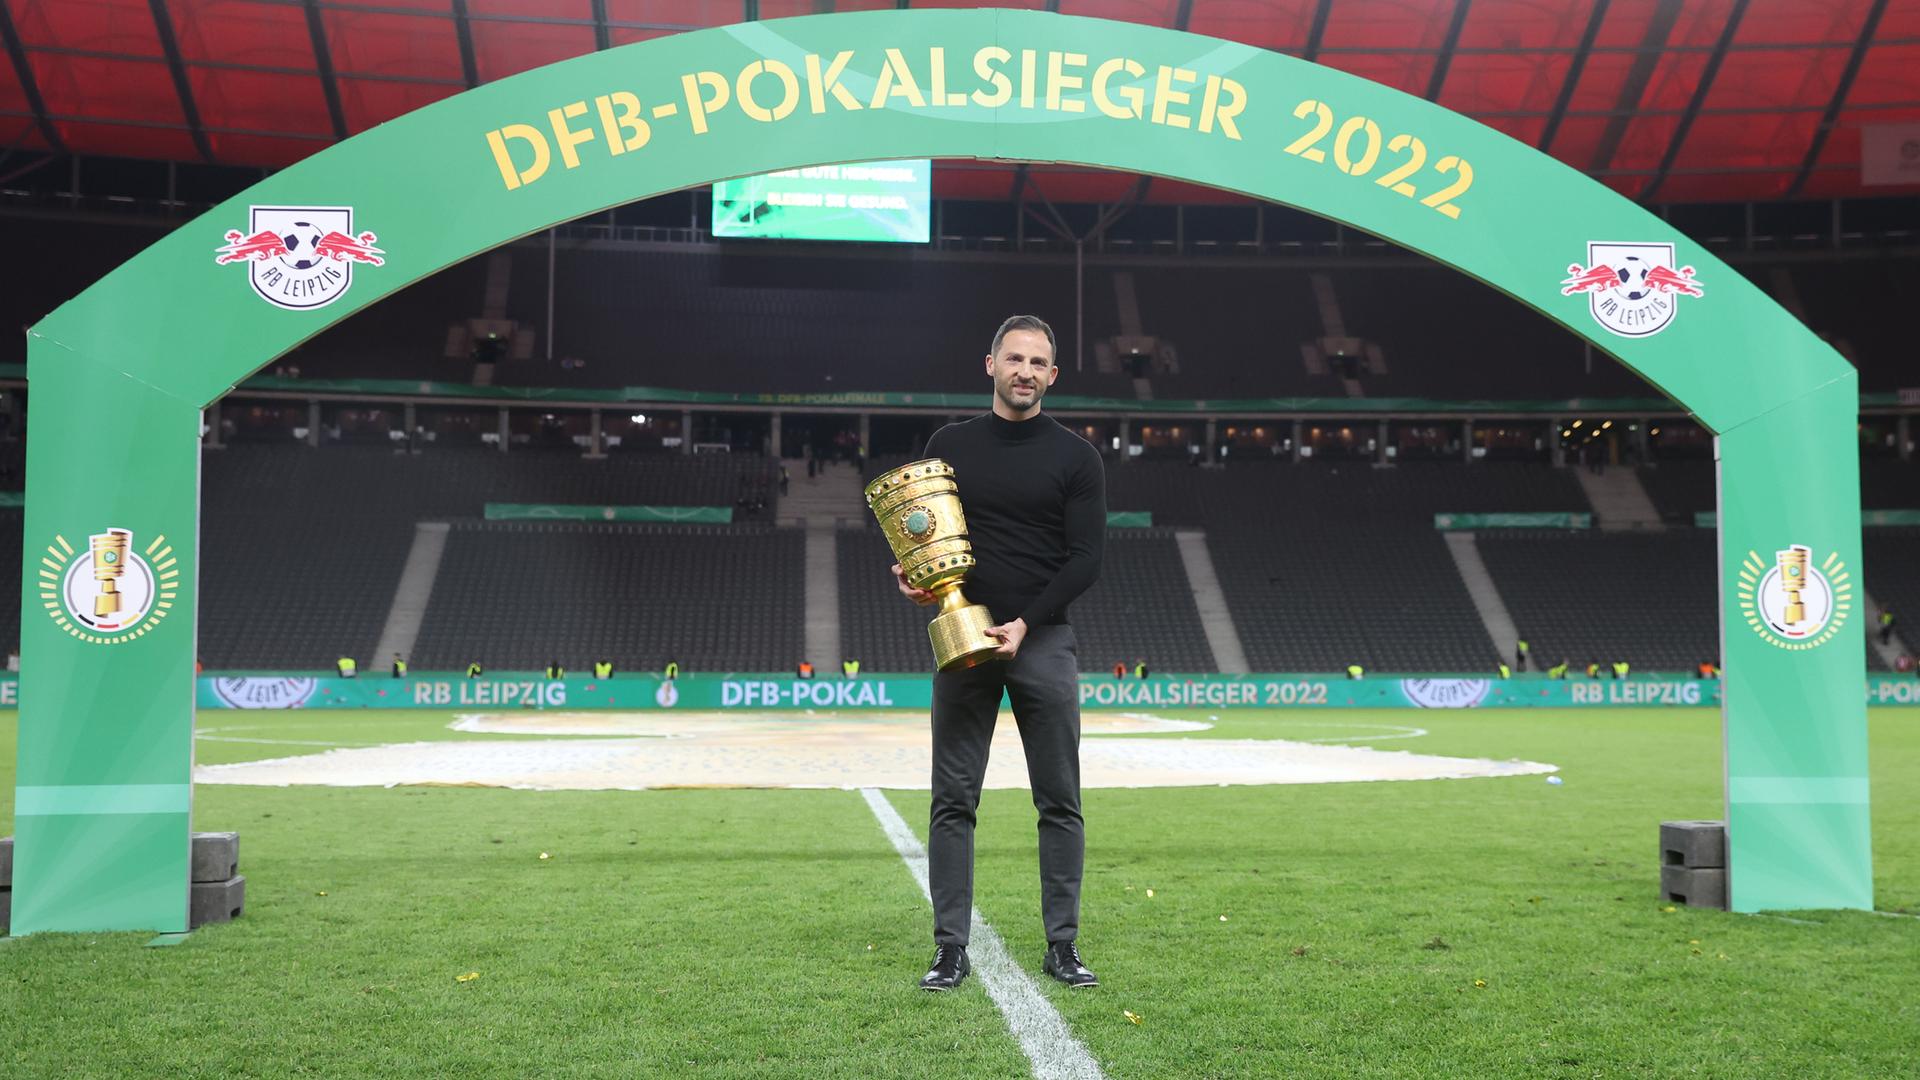 Leipziger Sieg im DFB-Pokal - Aushöhlung der Regeln